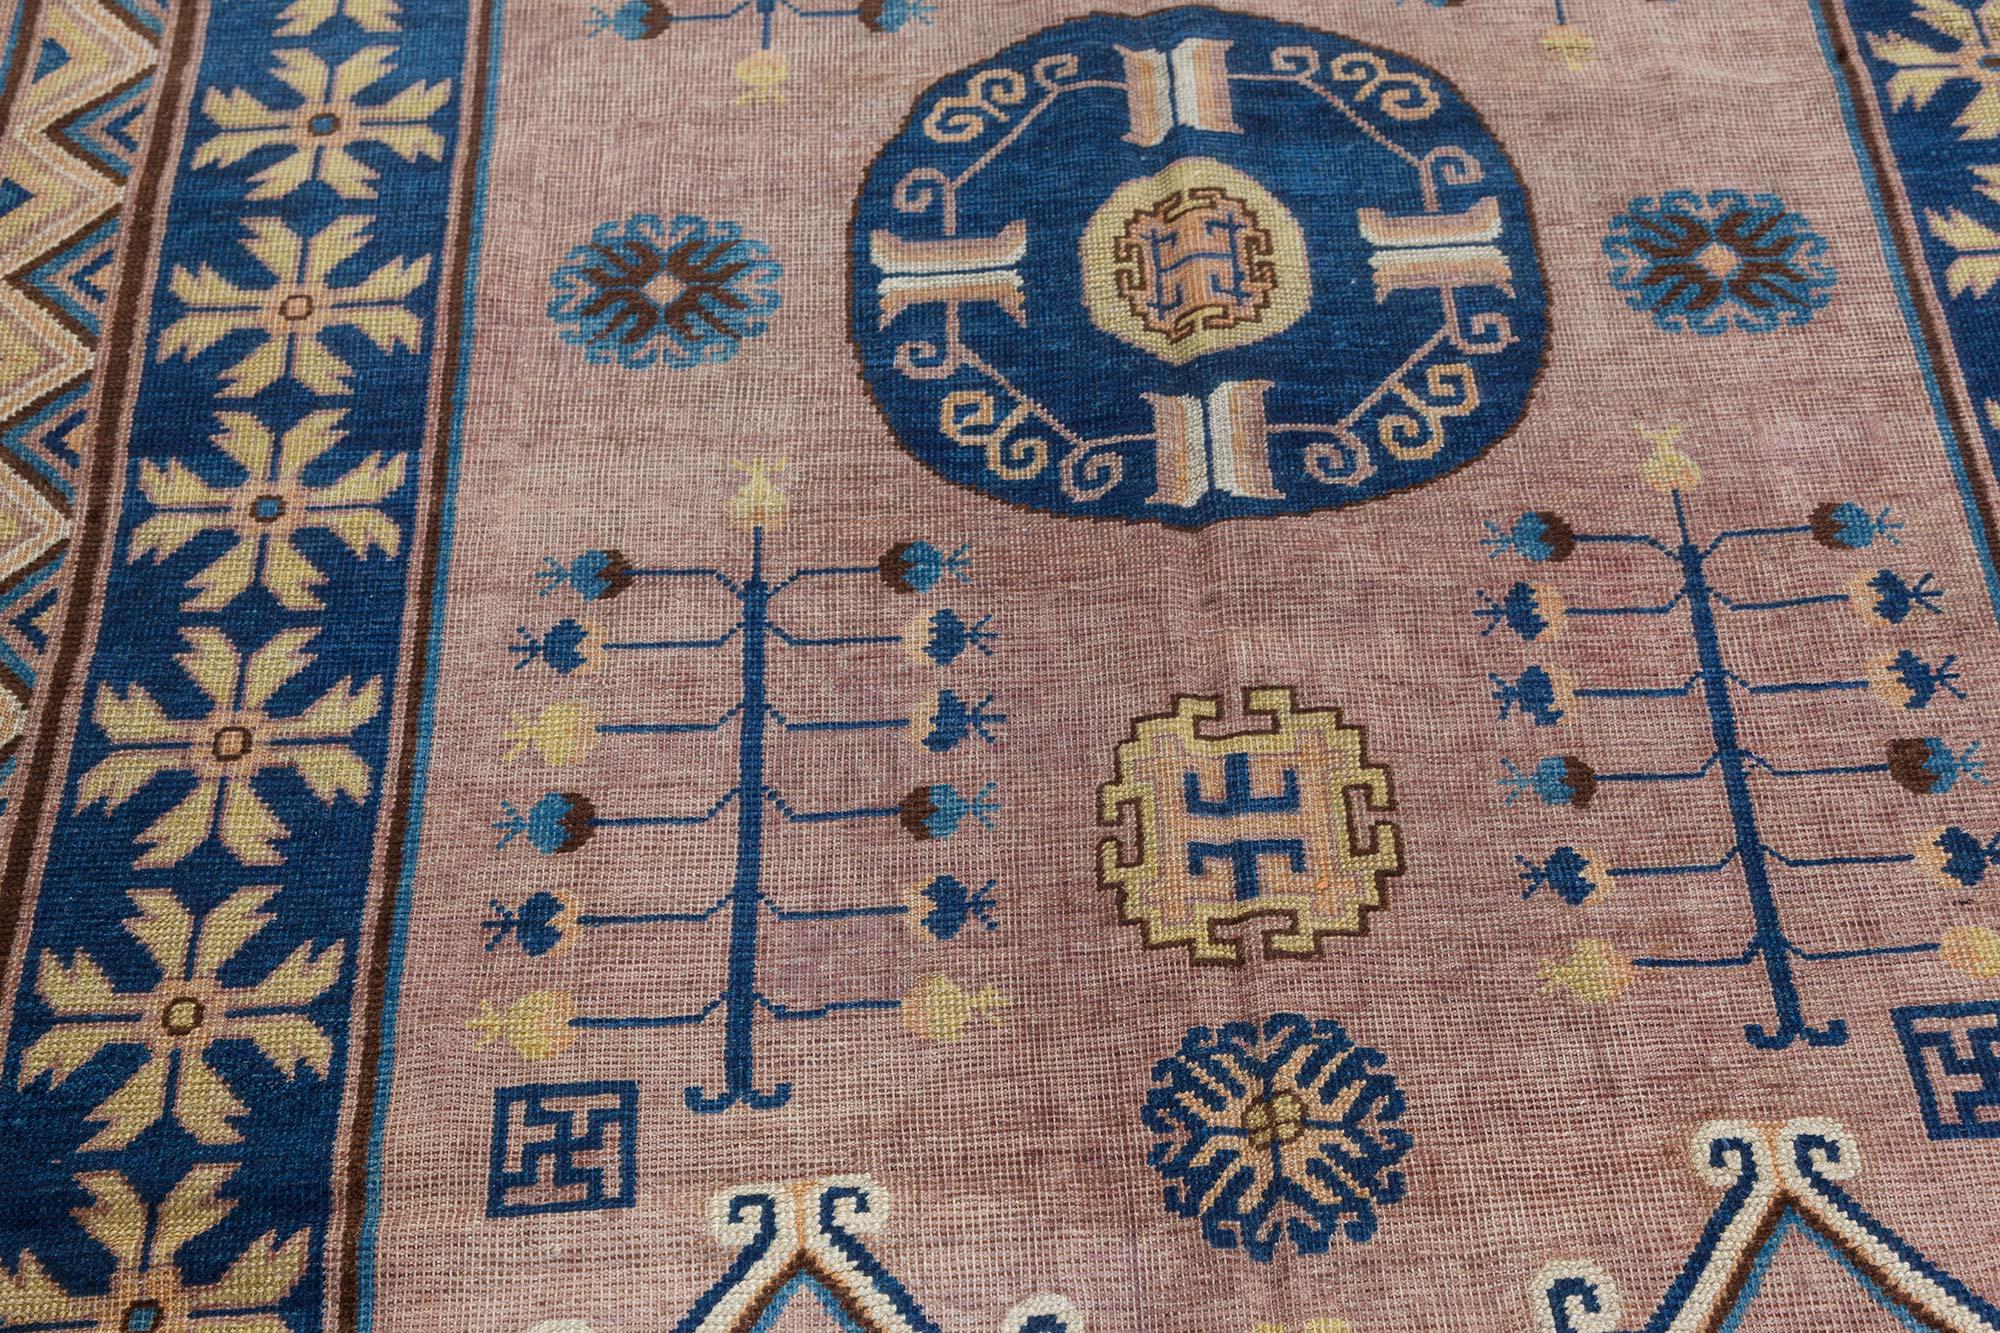 Vintage Samarkand 'Khotan' brown, blue handmade wool rug.
Size: 4'7